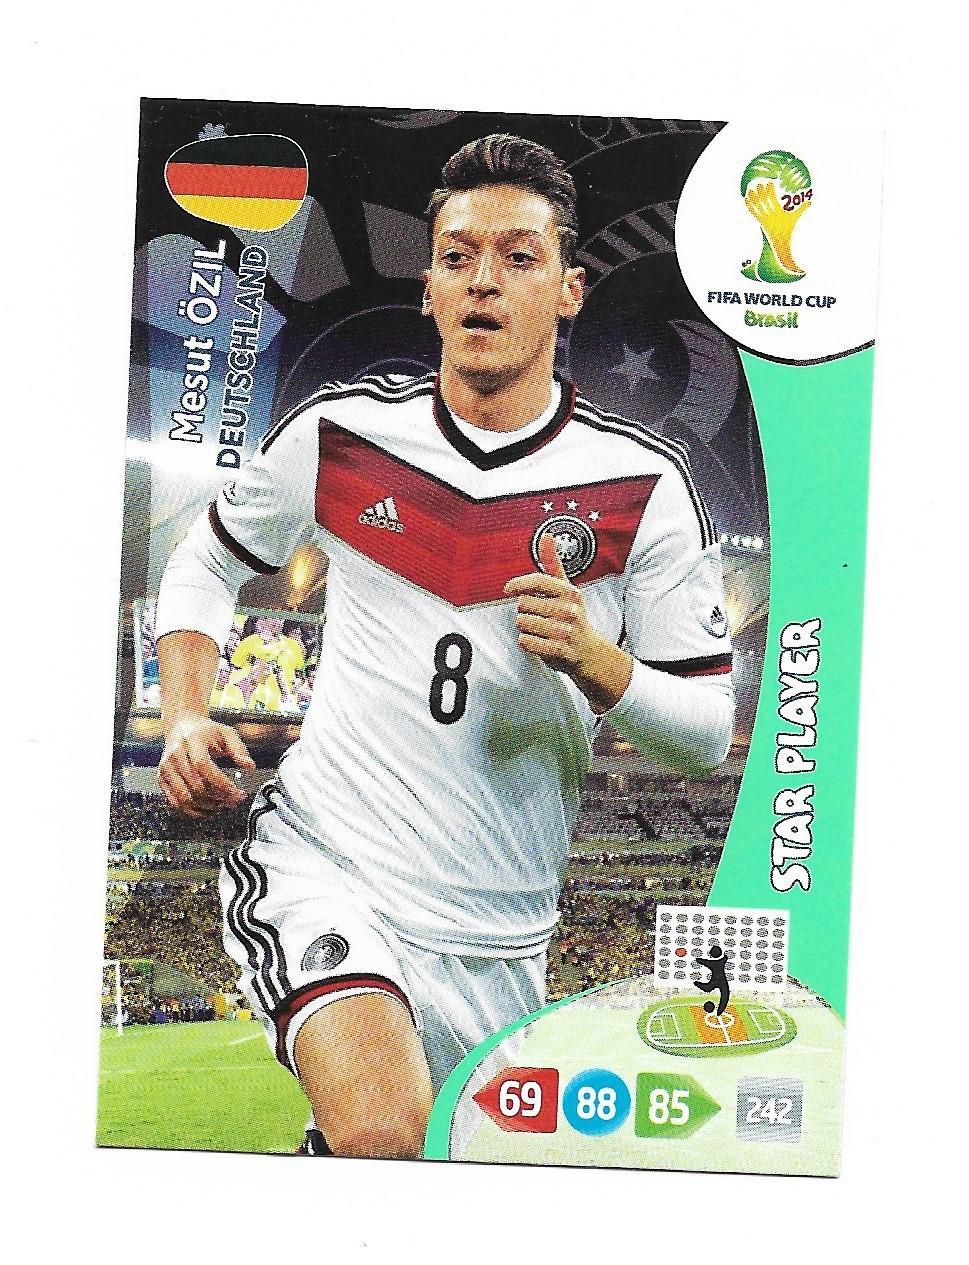 Mesut_Ozil_Deutschland_FIFA_ WORLD_CUP_2014_Brazil_(Adren alin)